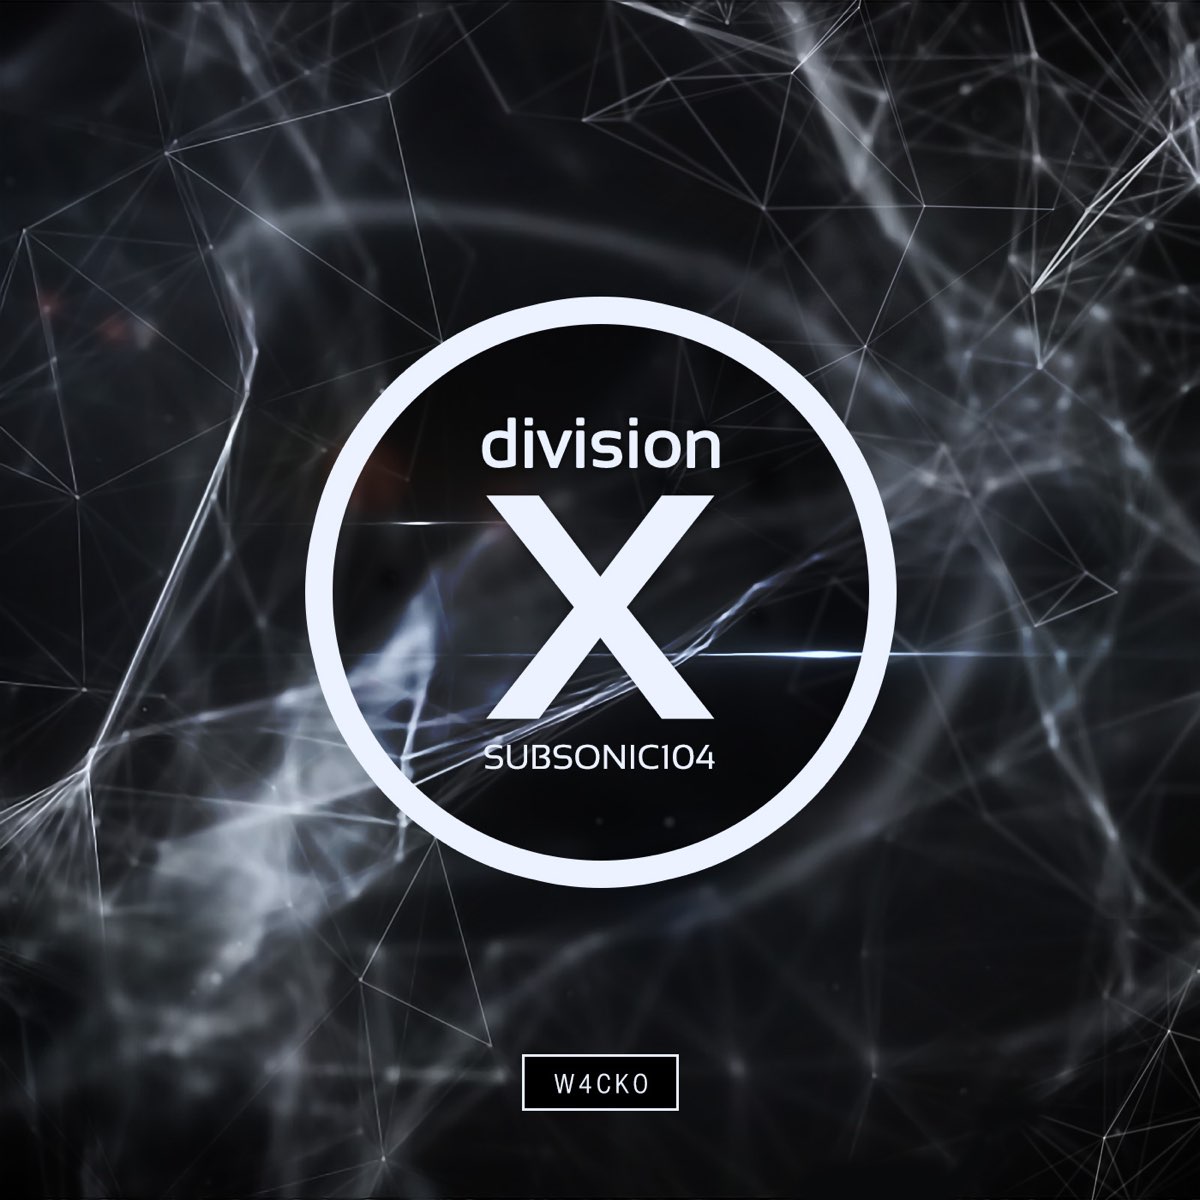 X div 8. Remix given.